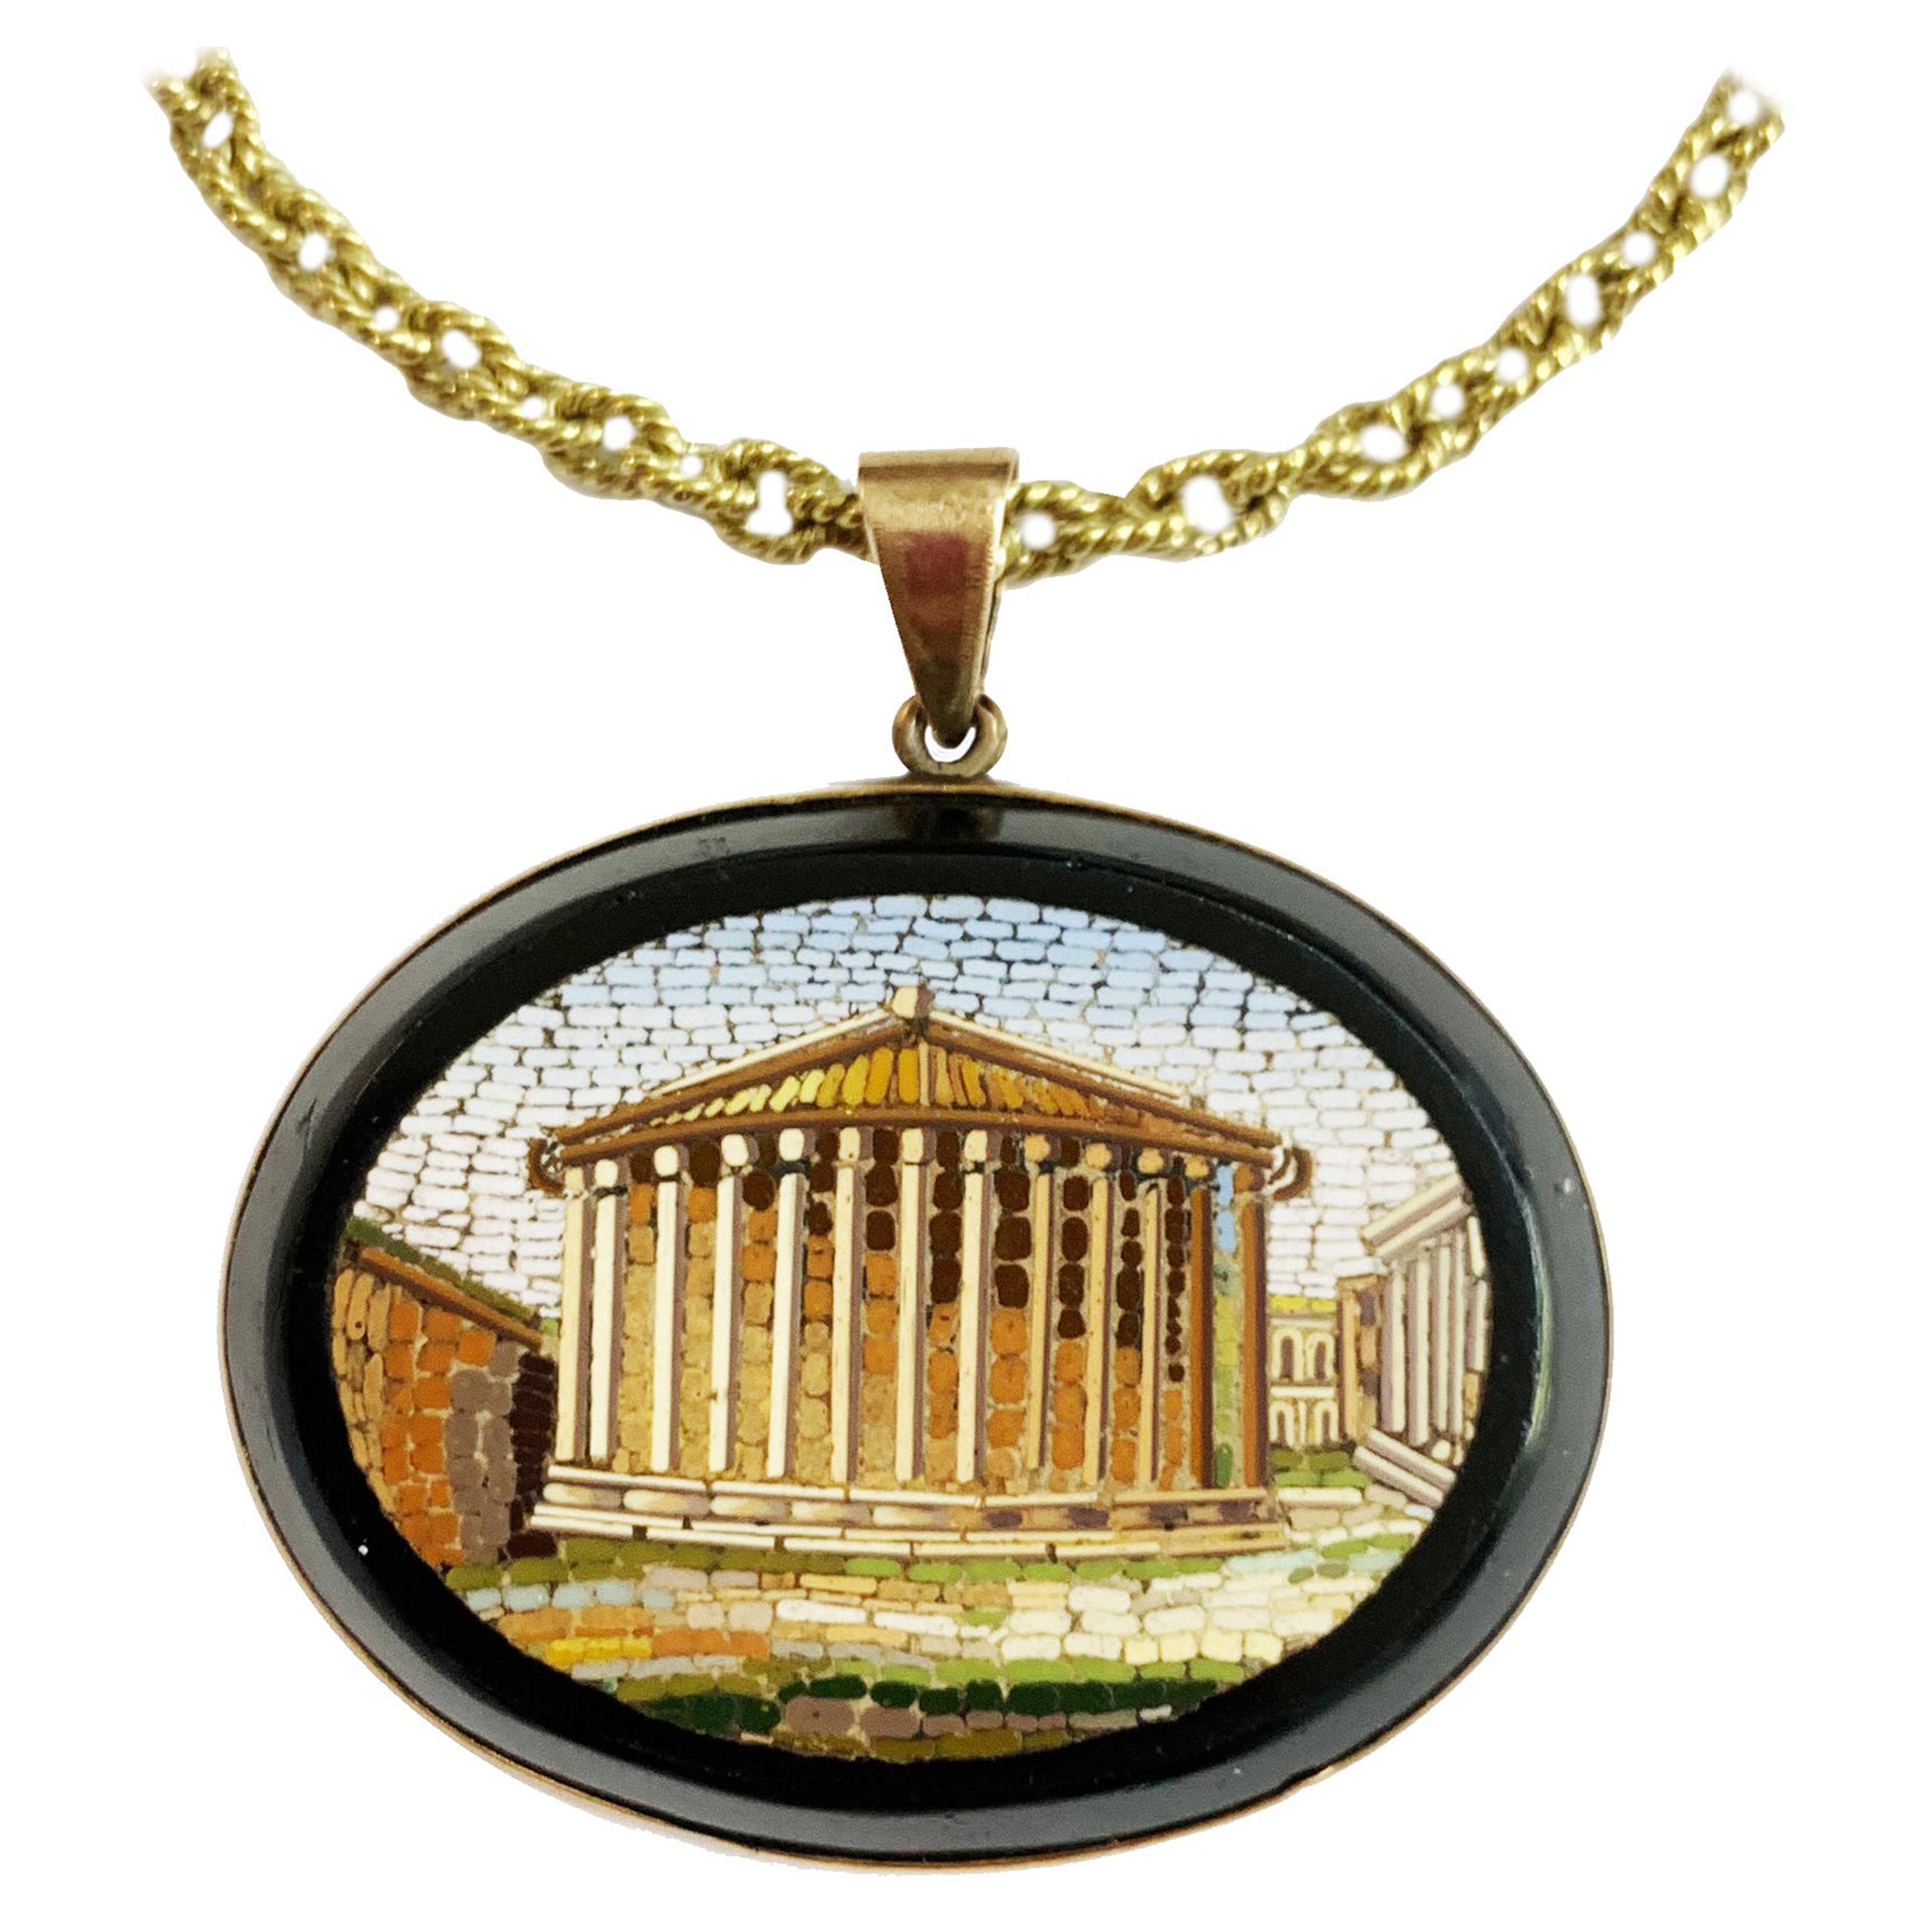 Micromosaic Pendant 'circa 1850' Depicting the Temple of Vesta, Rome For Sale